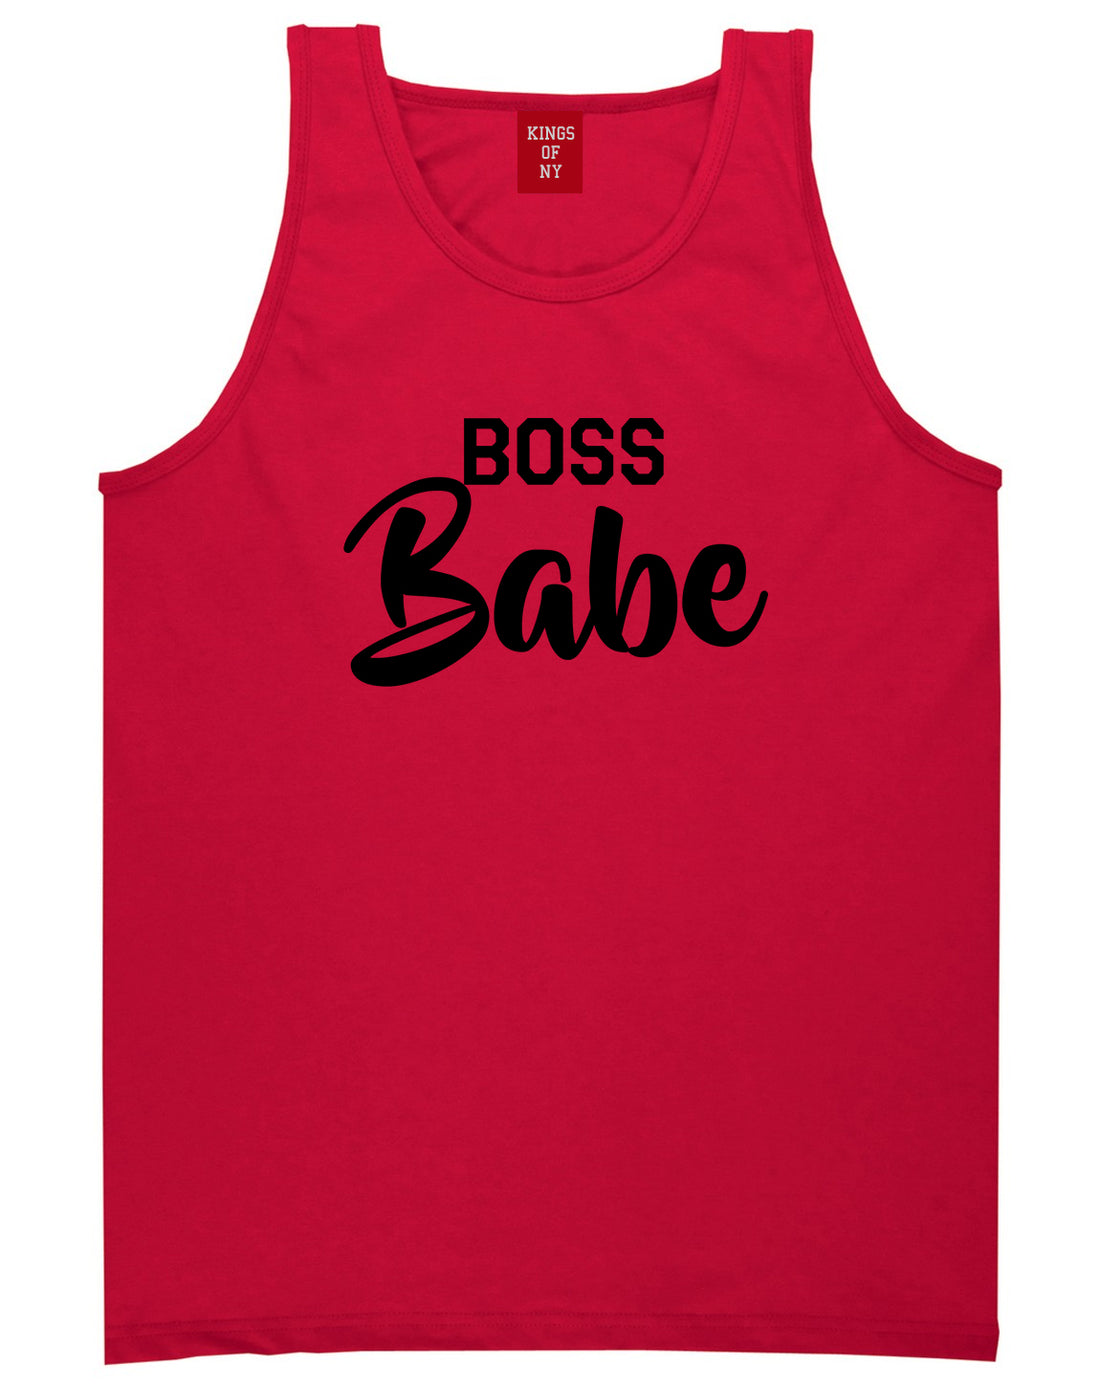 Boss Babe Mens Red Tank Top Shirt by KINGS OF NY